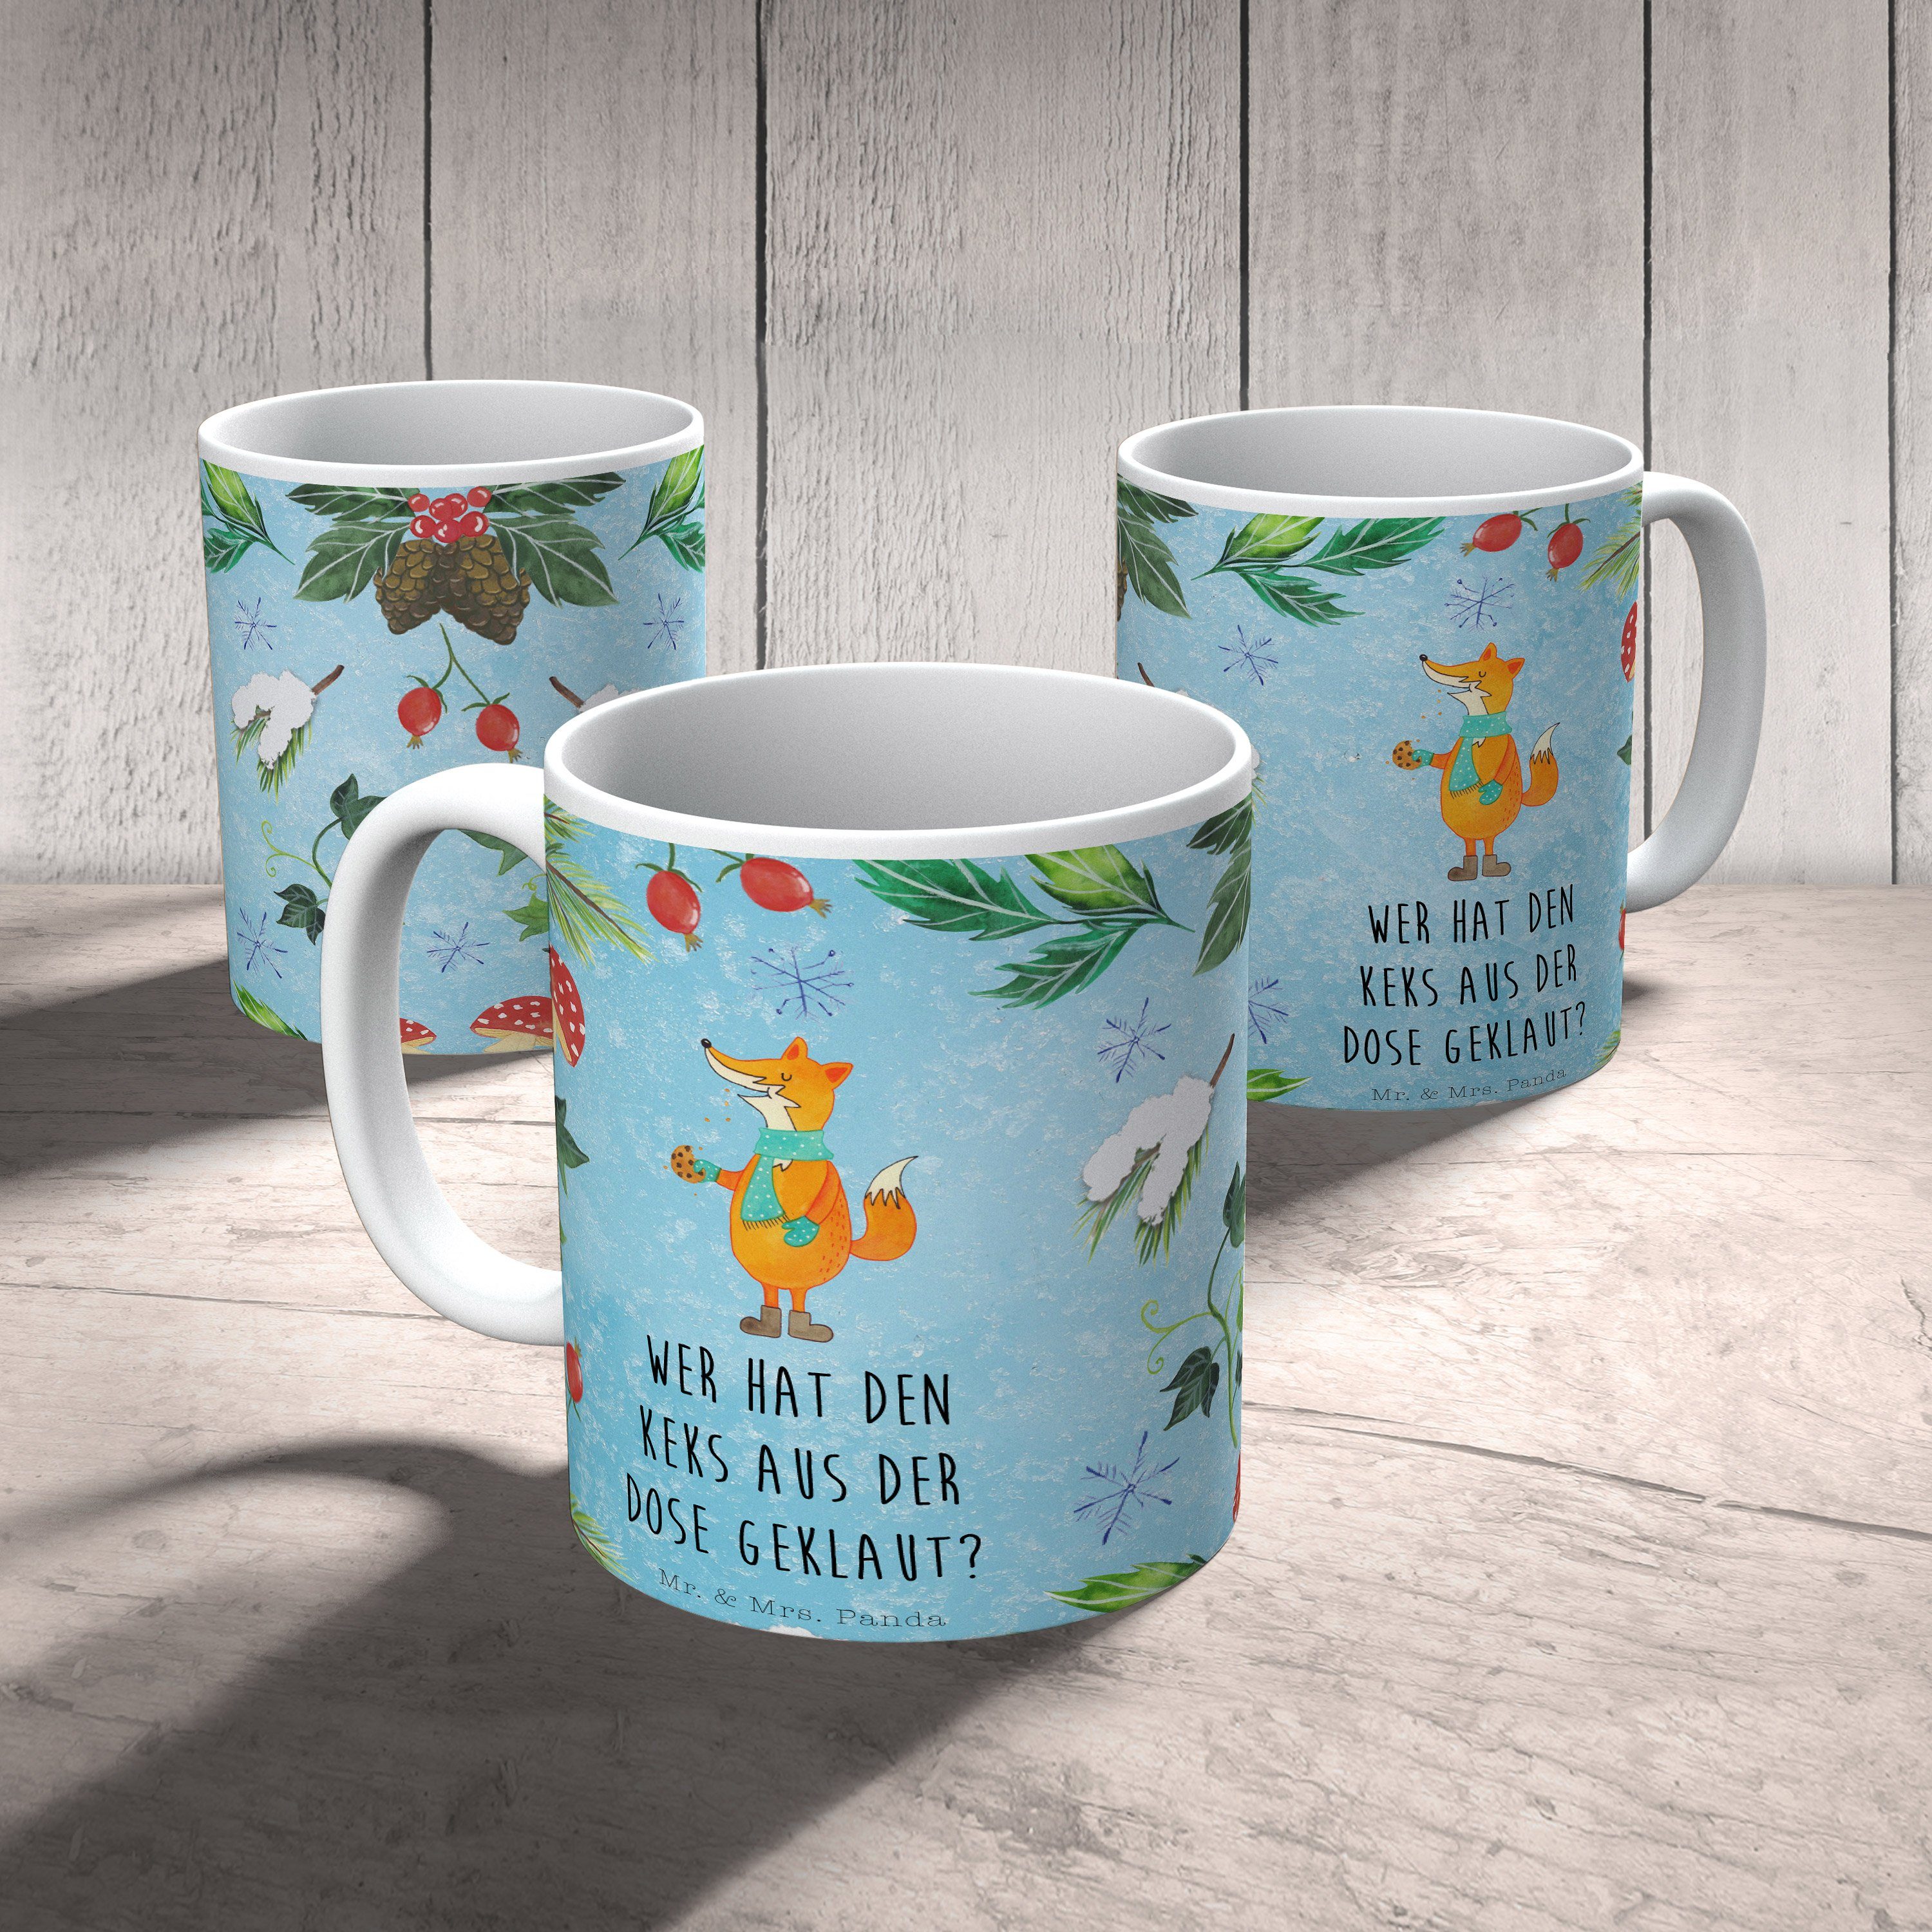 Mr. & Mrs. Panda Fuchs Keramik Eisblau - Geschenk, Tasse Weihnachten, - Keksdose Kaffeebecher, Porze